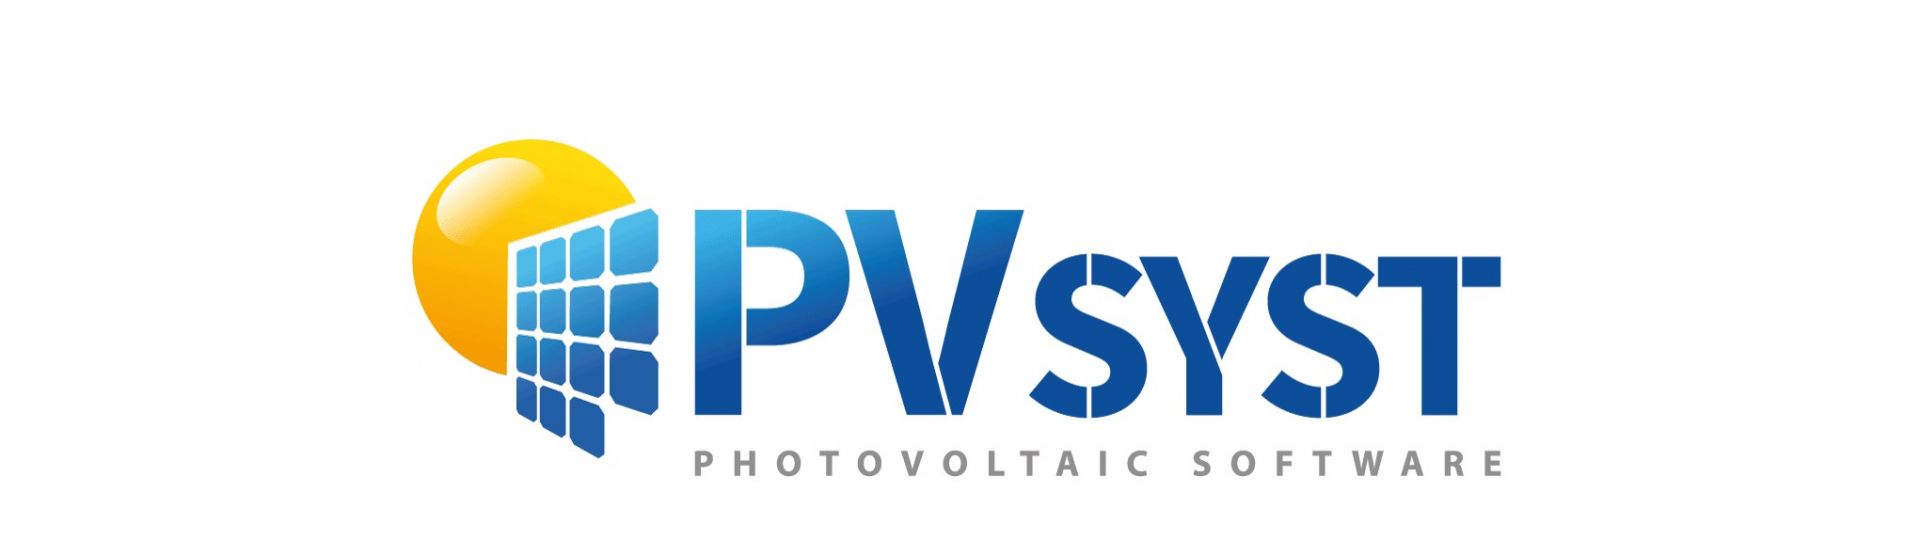 PVsyst 7.2 太陽能系統